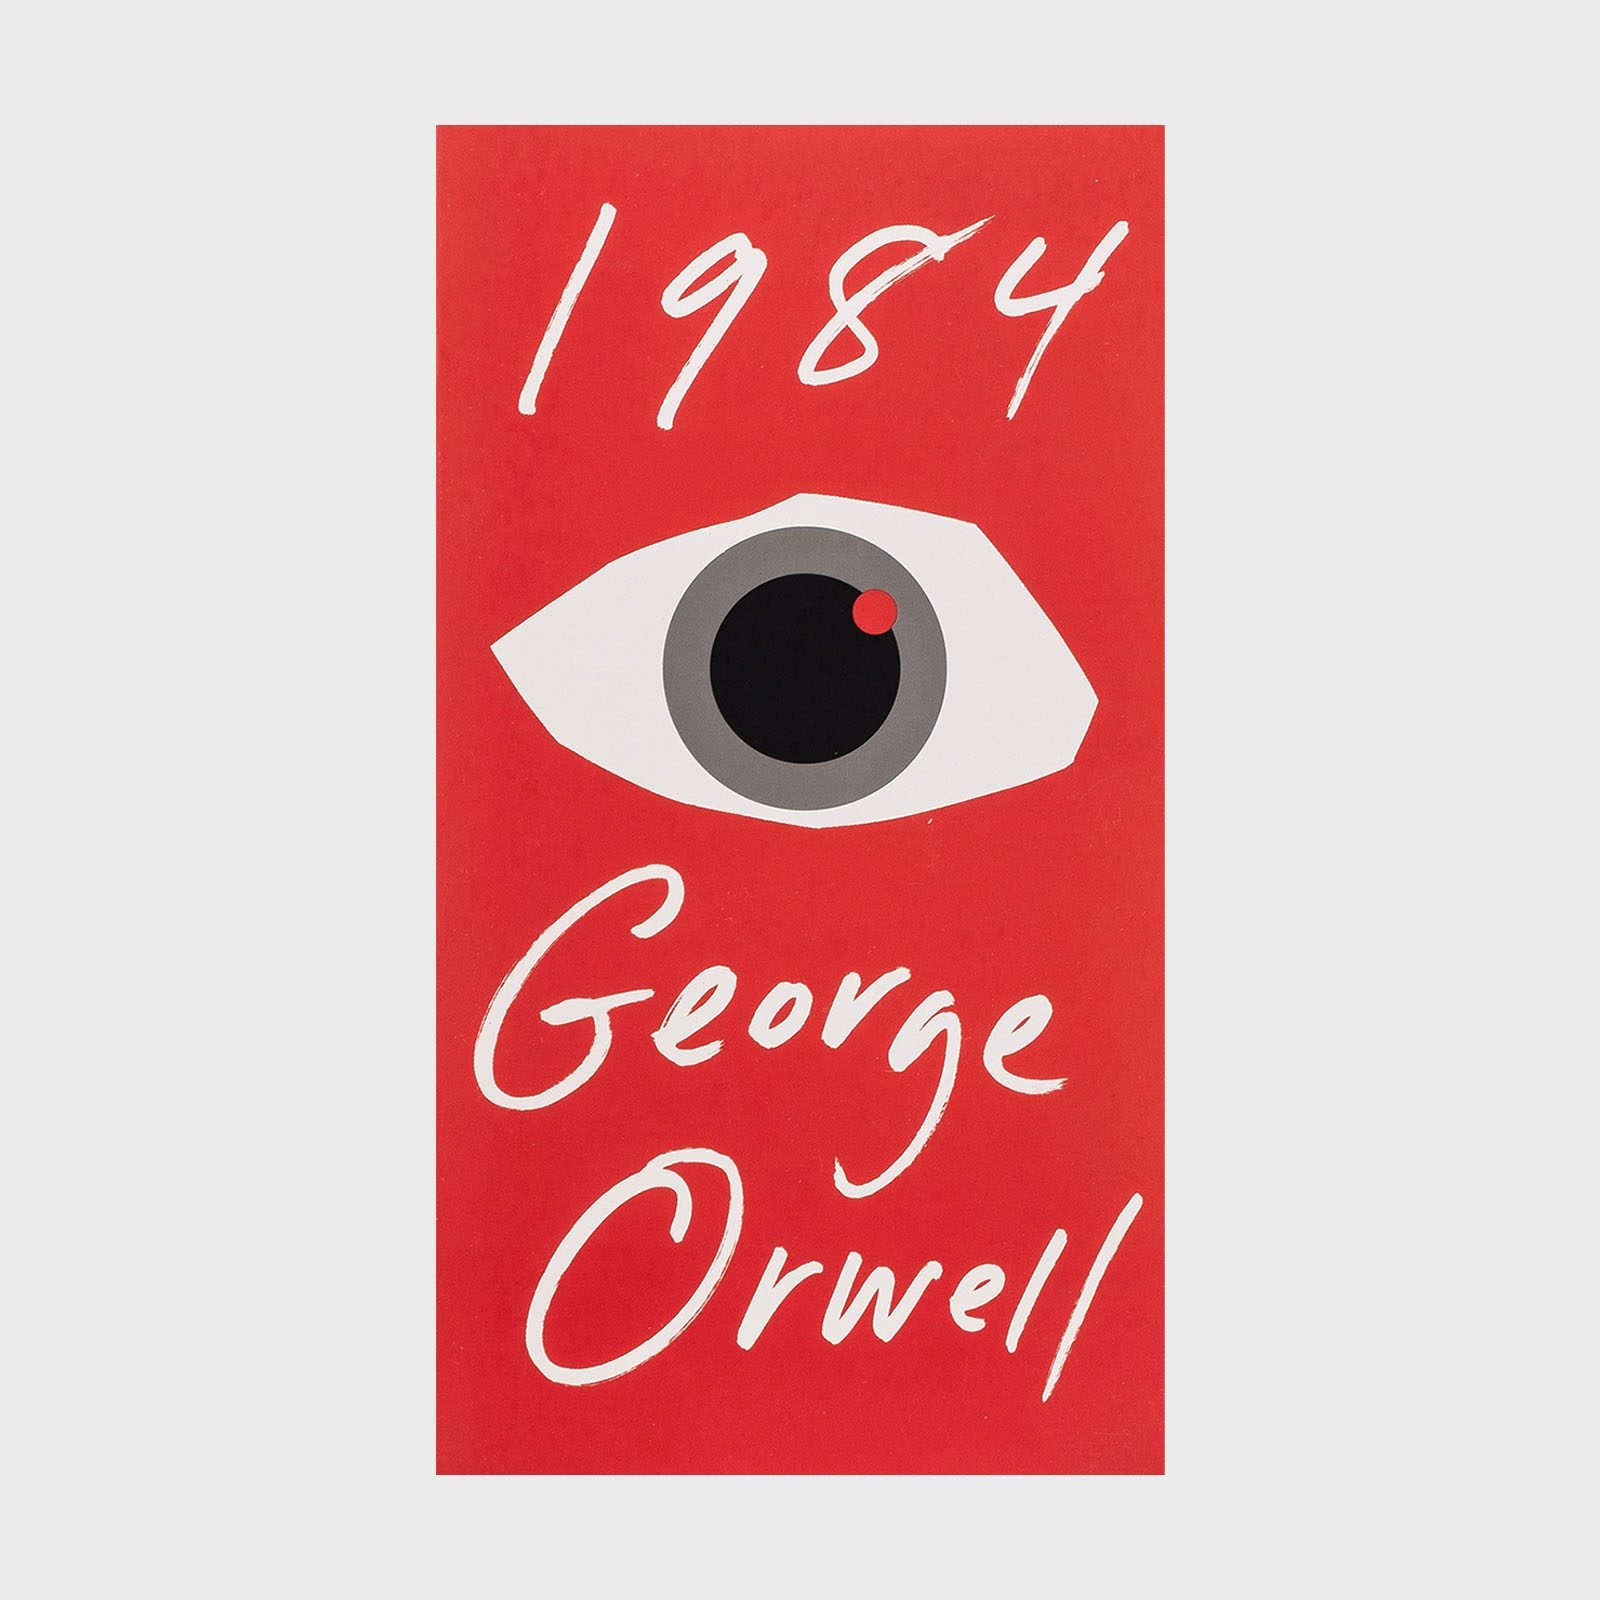 00 1984 By George Orwell Via Amazon